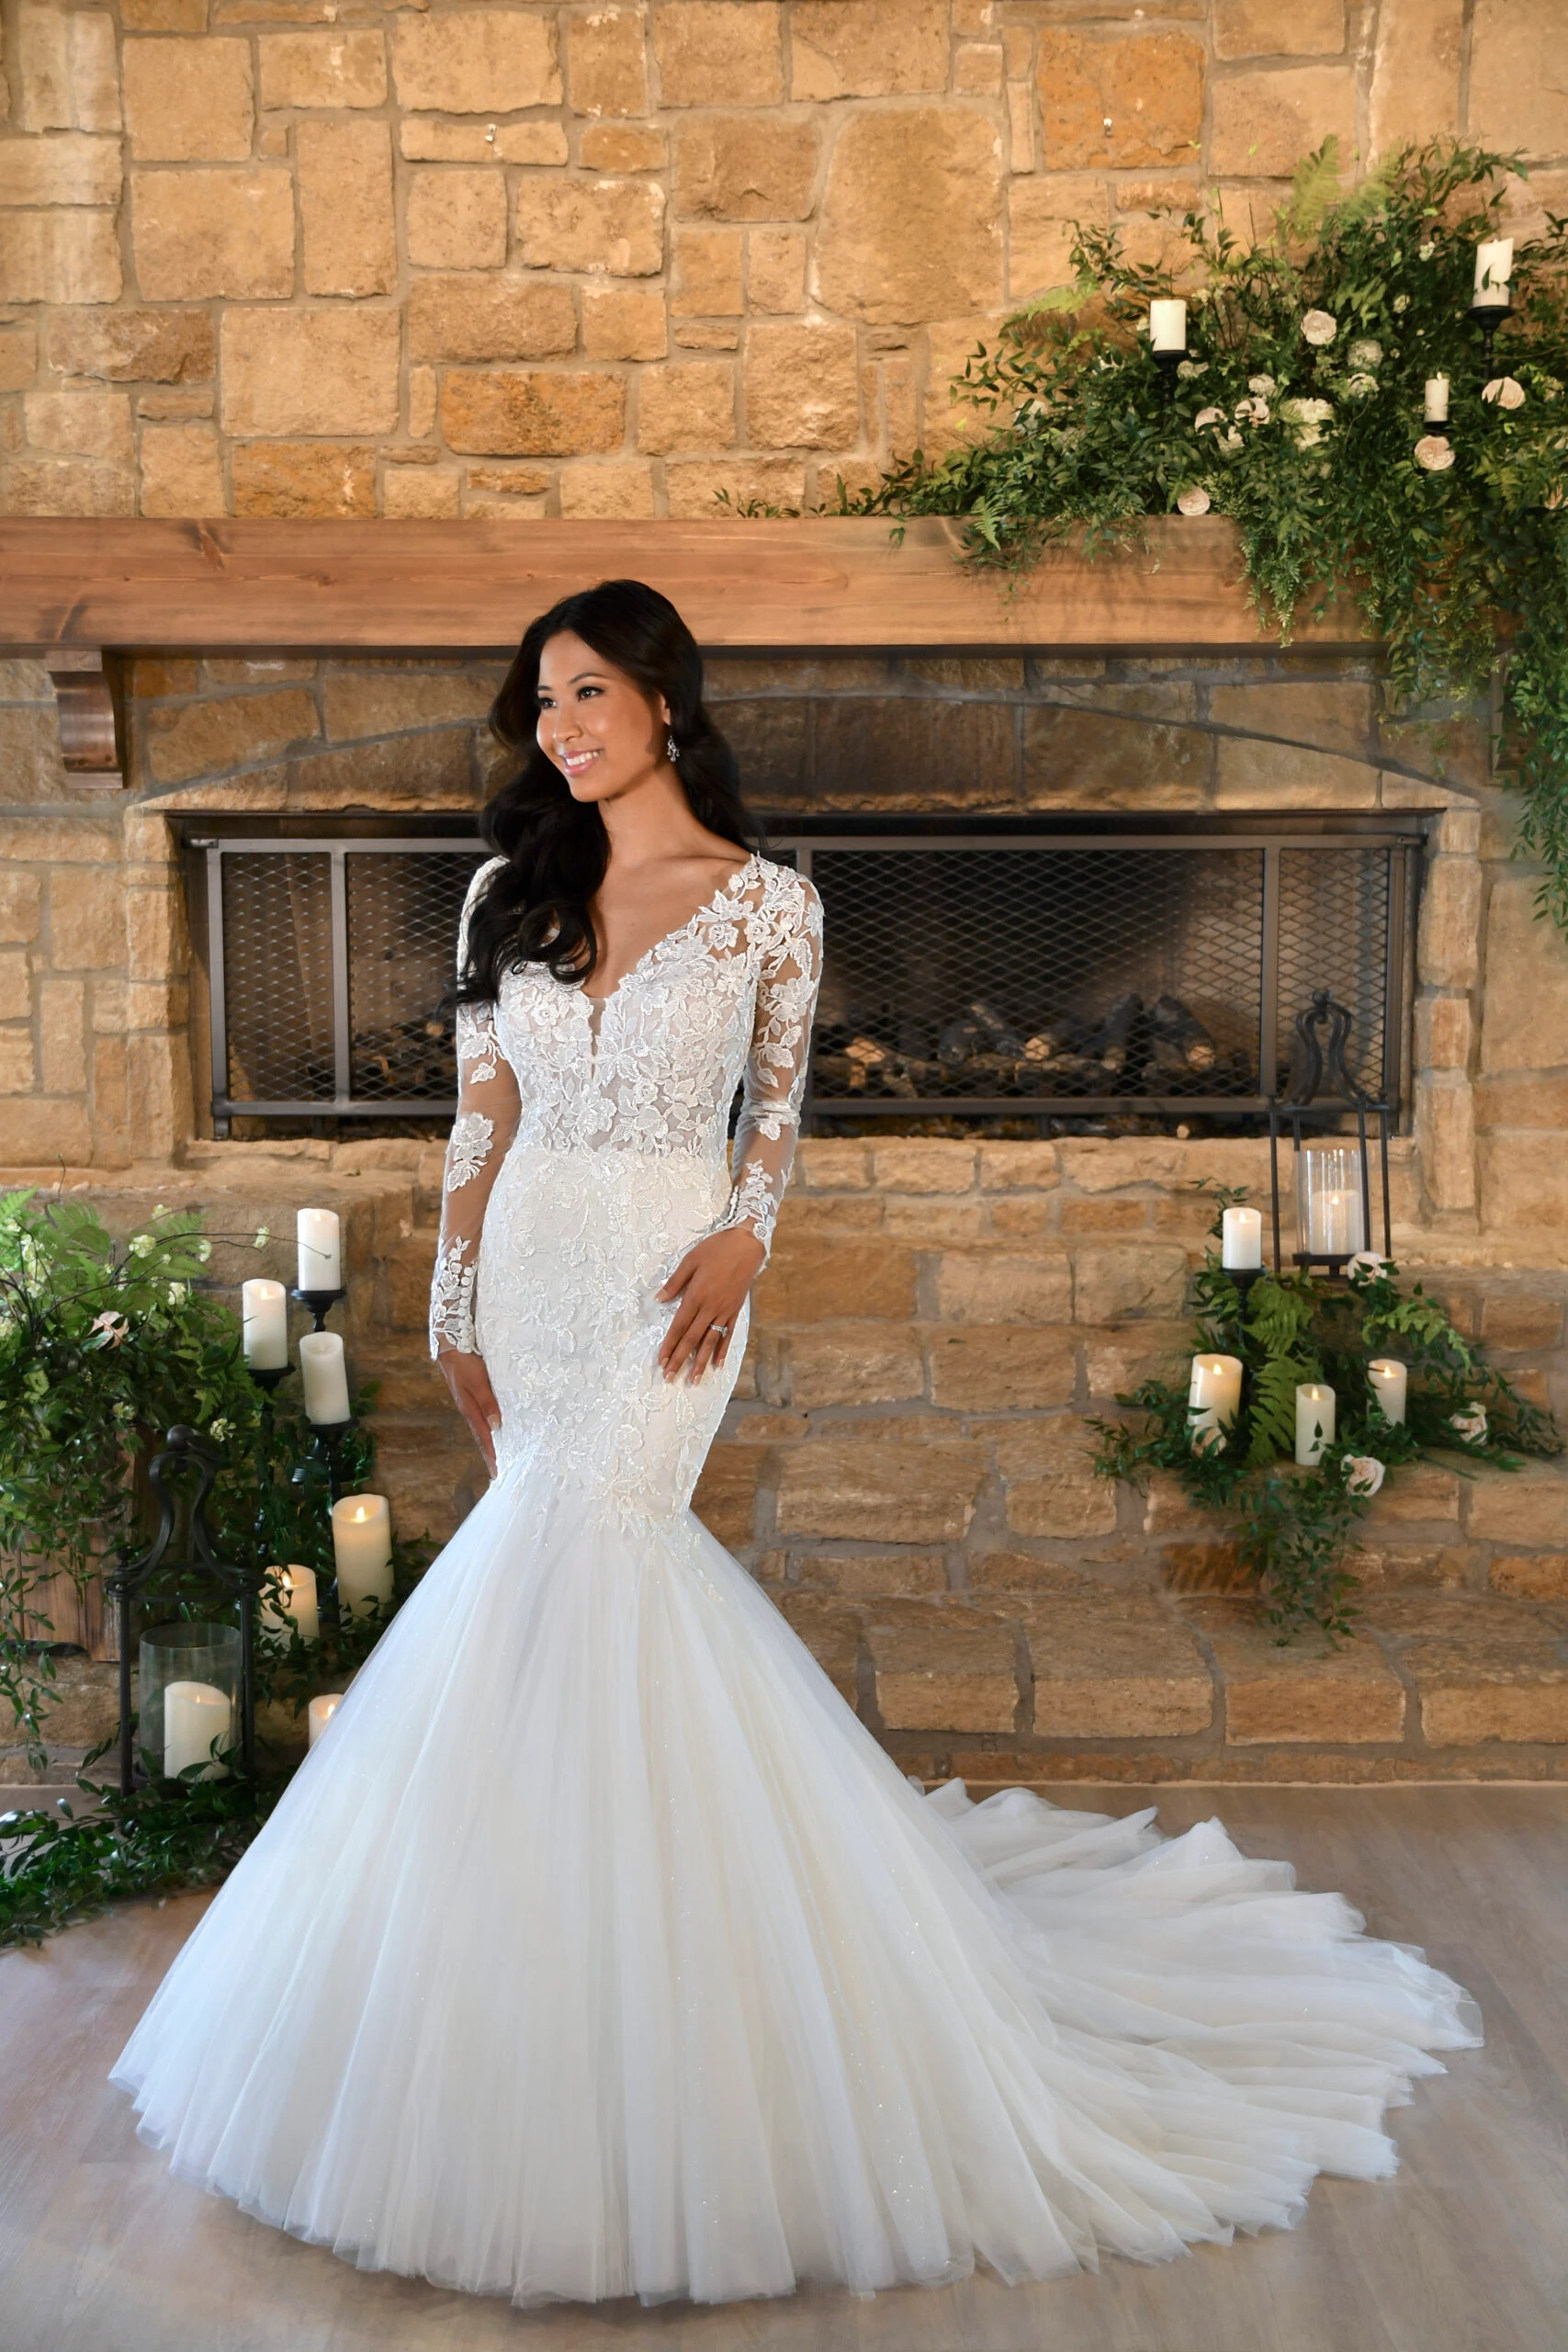 Bride wearing a long sleeve lace wedding dress